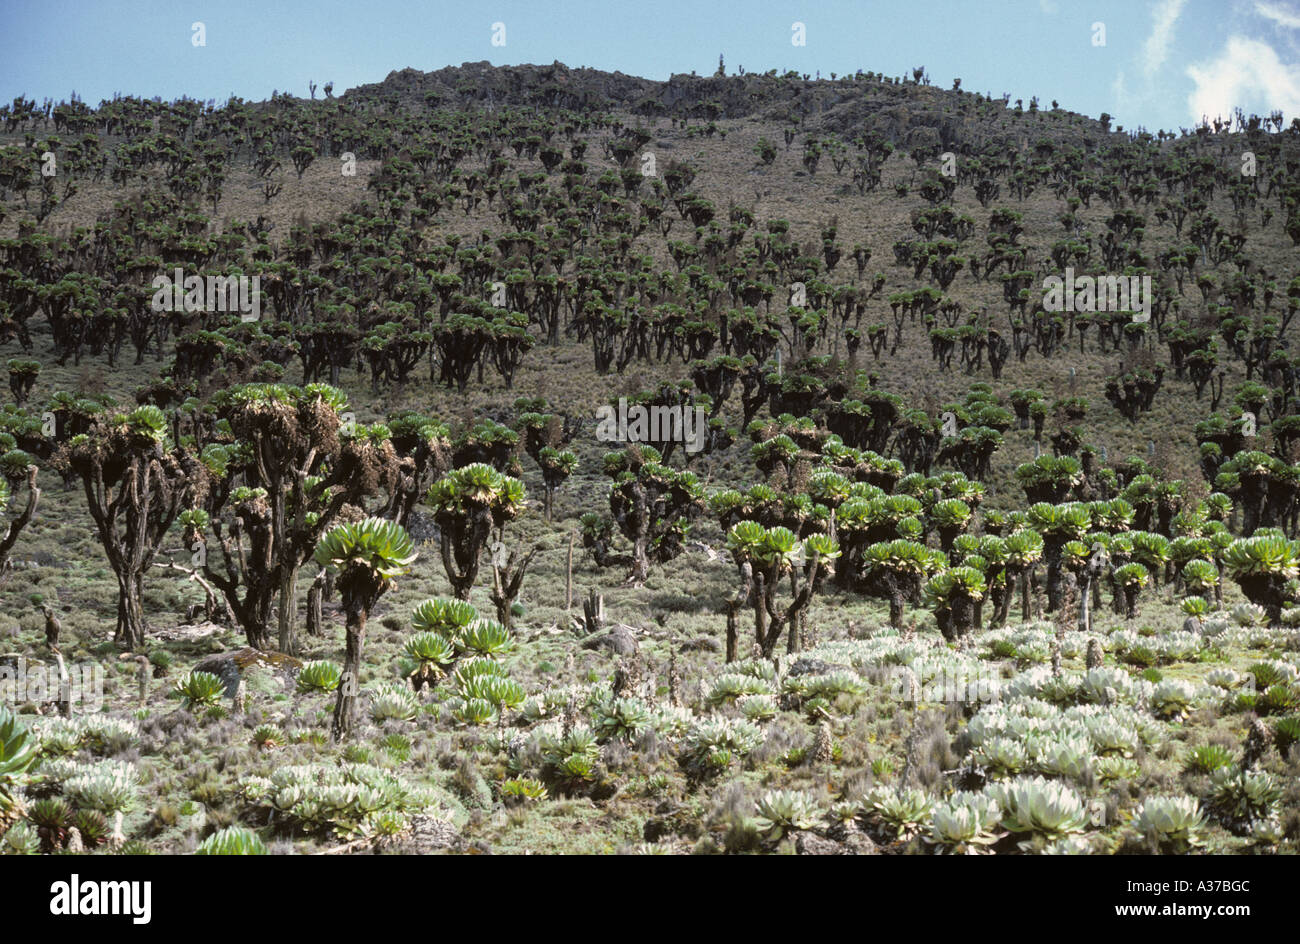 Giant Groundsels Senecio Species Teleki Valley Mount Kenya Kenya East Africa 3 962 metres 13 000 feet Stock Photo